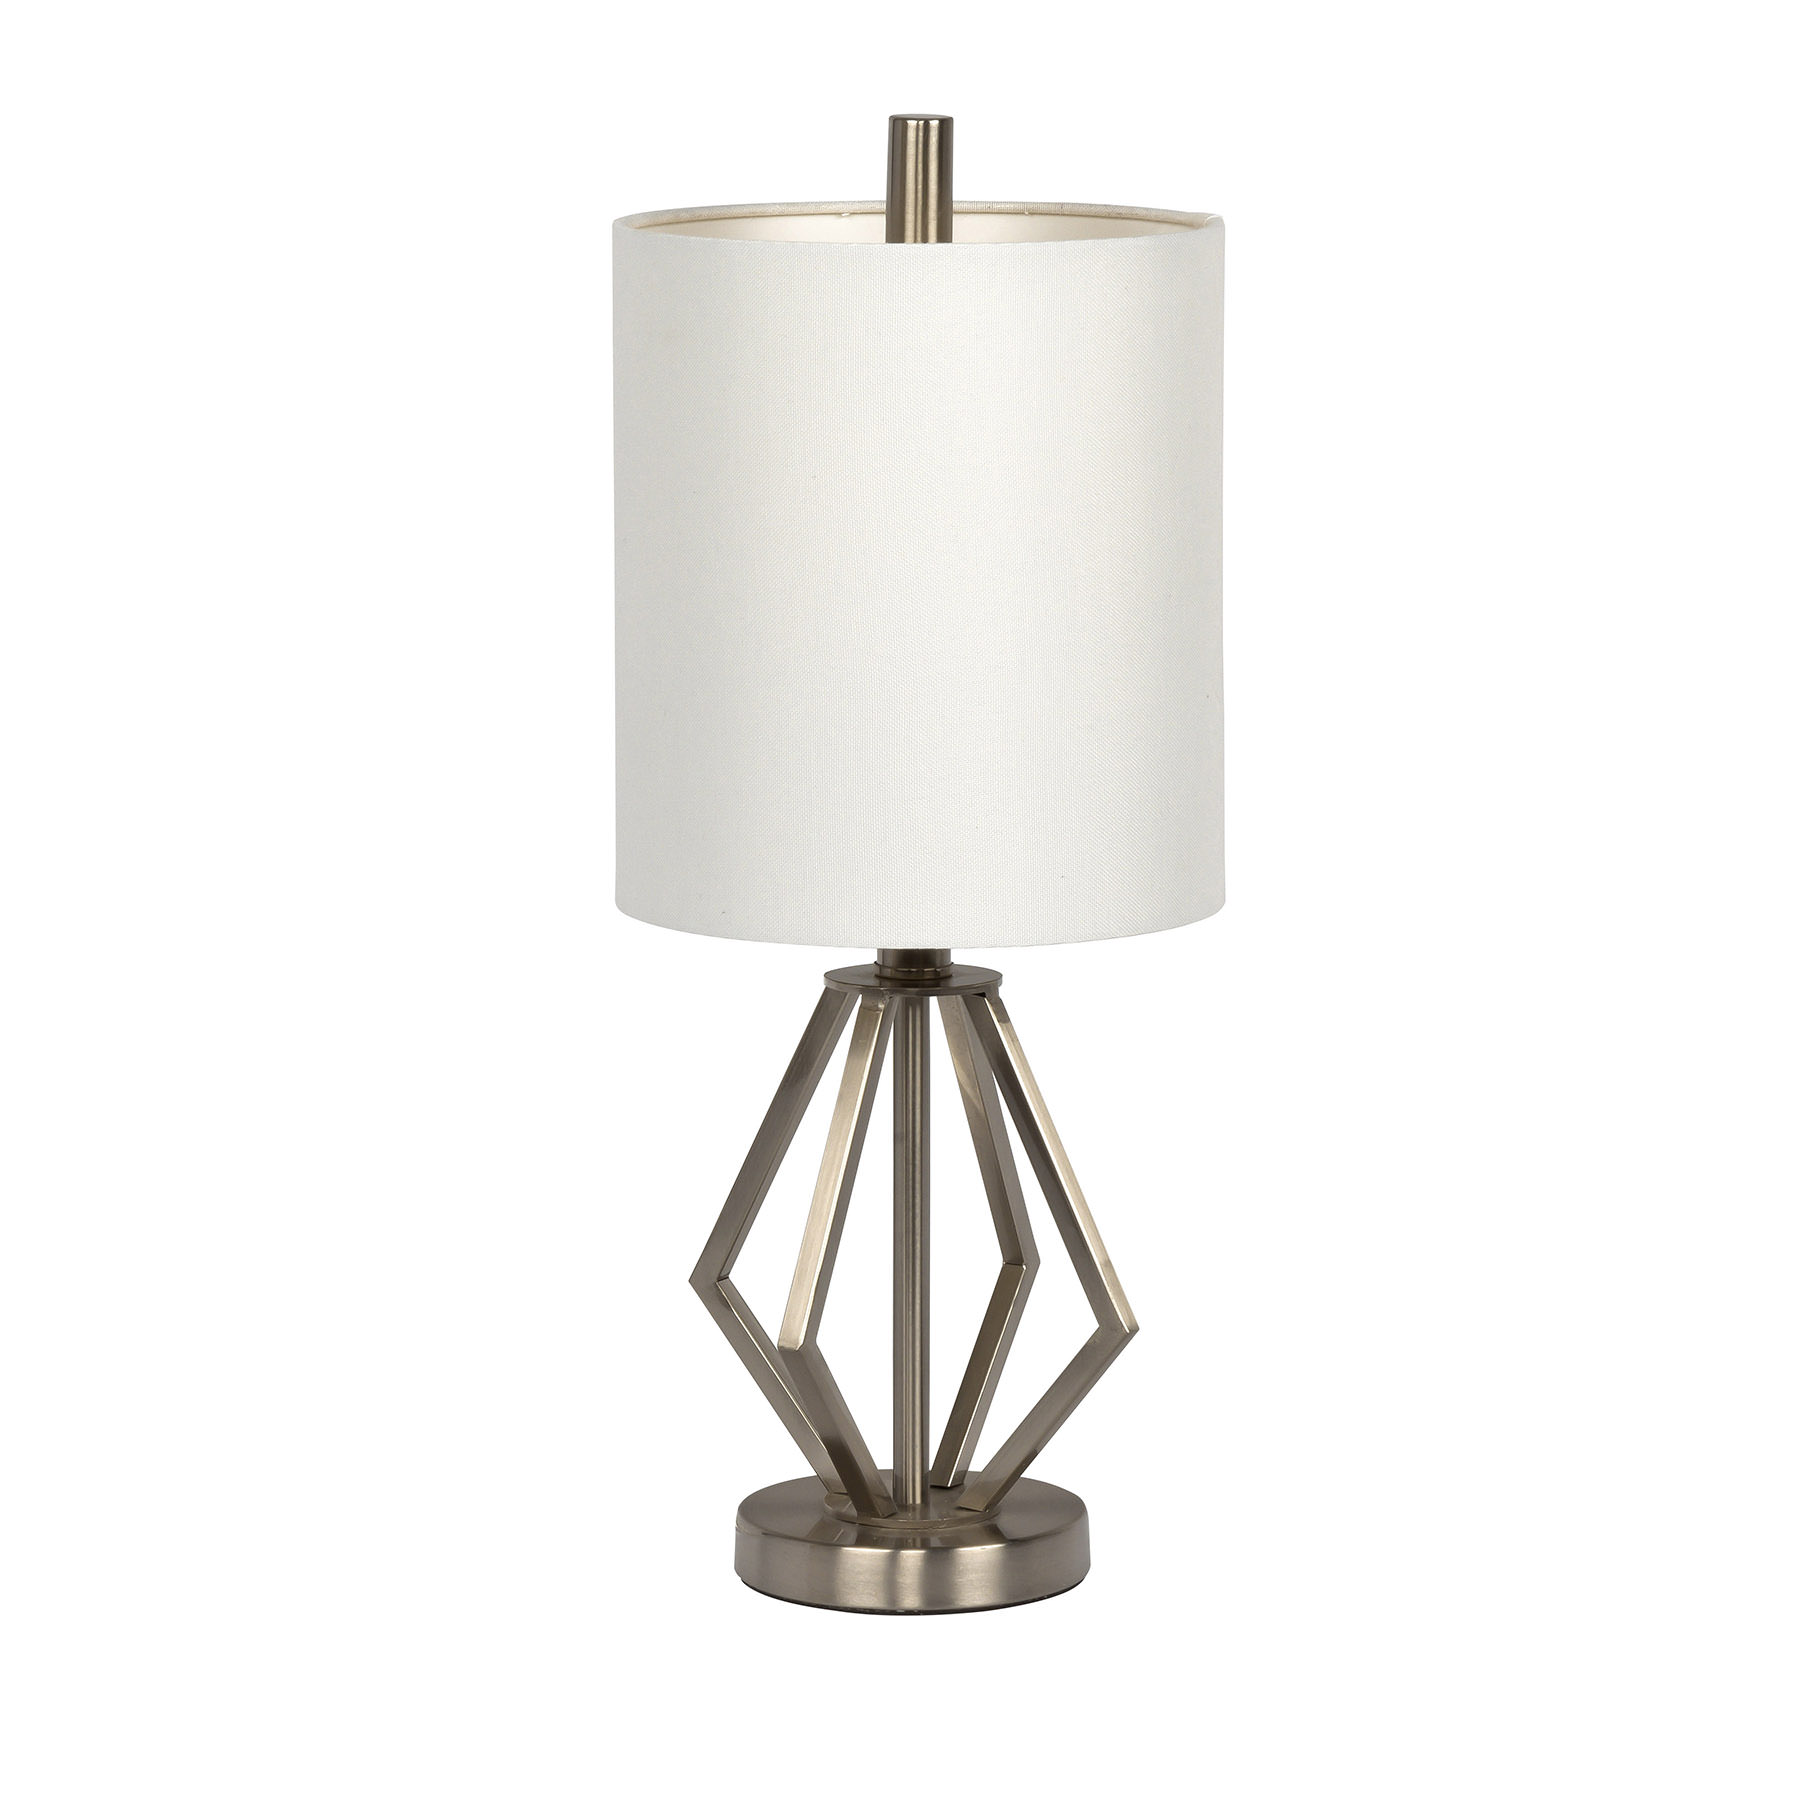 Craftmade 86233 1 Light Metal Base Table Lamp in Brushed Polished Nickel